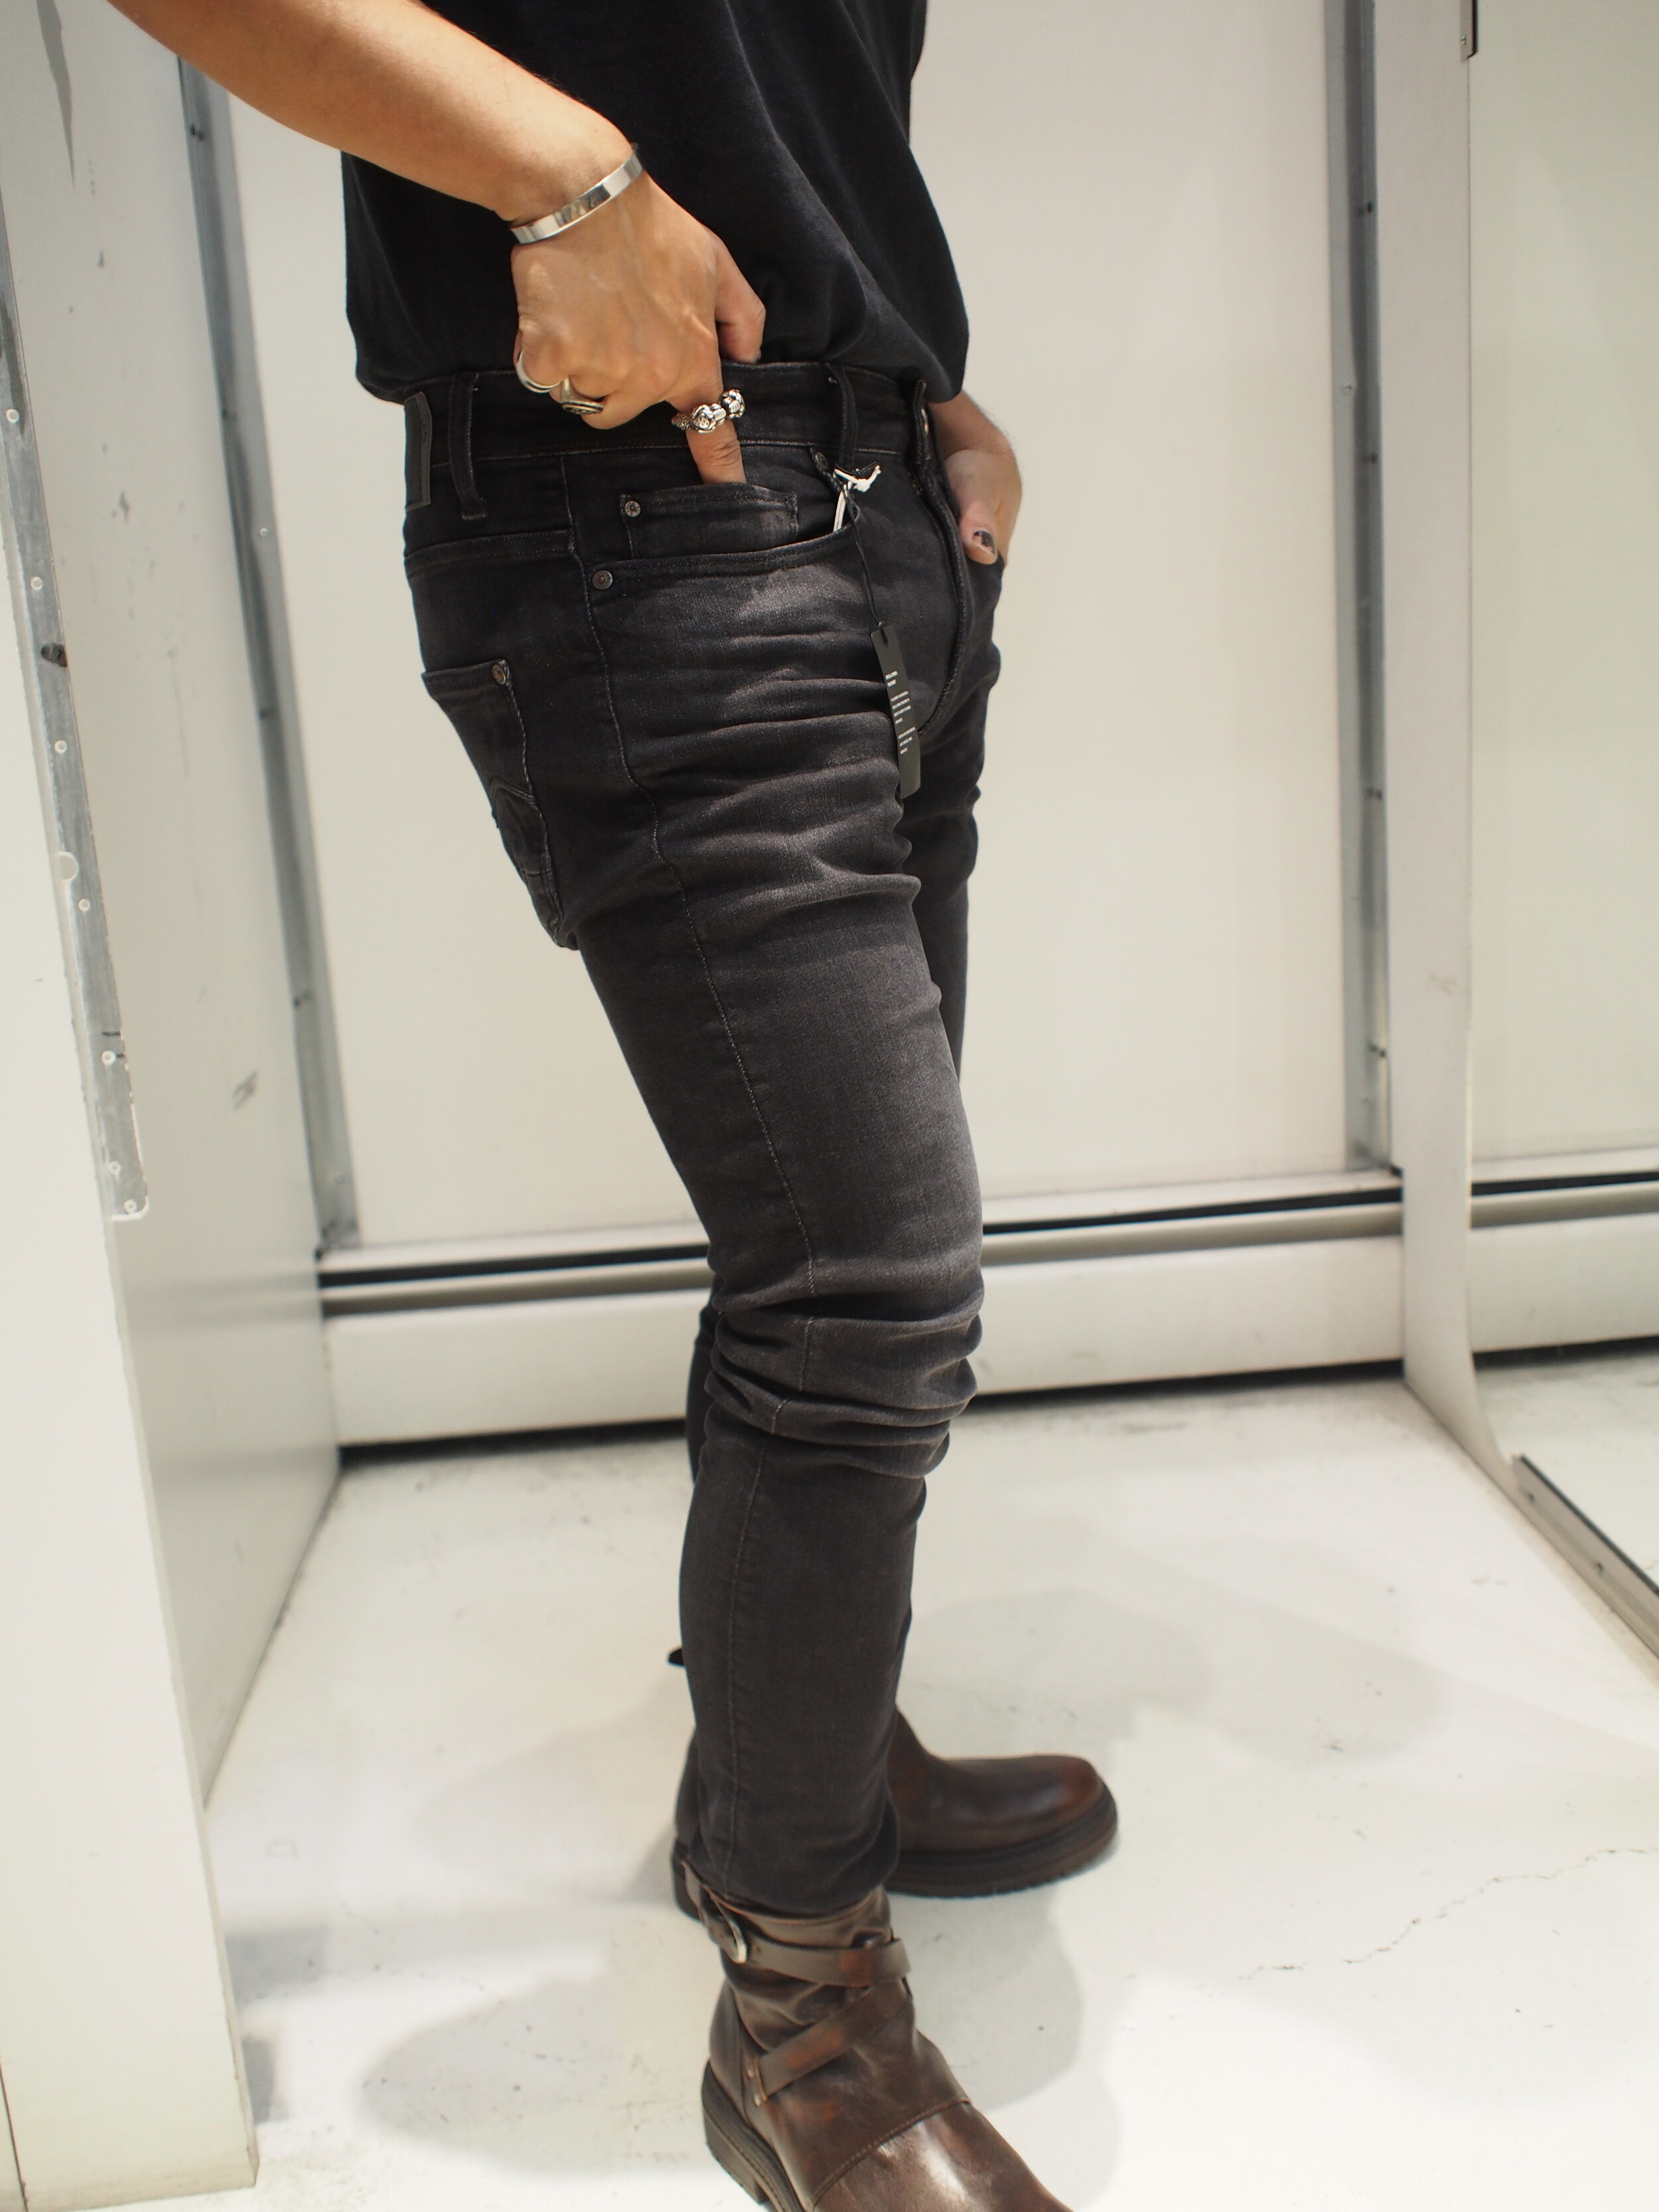 G-Star Raw Revend Skinny Jeans - Elto Superstretch Medium Aged Faded Black  — global atomic designs inc